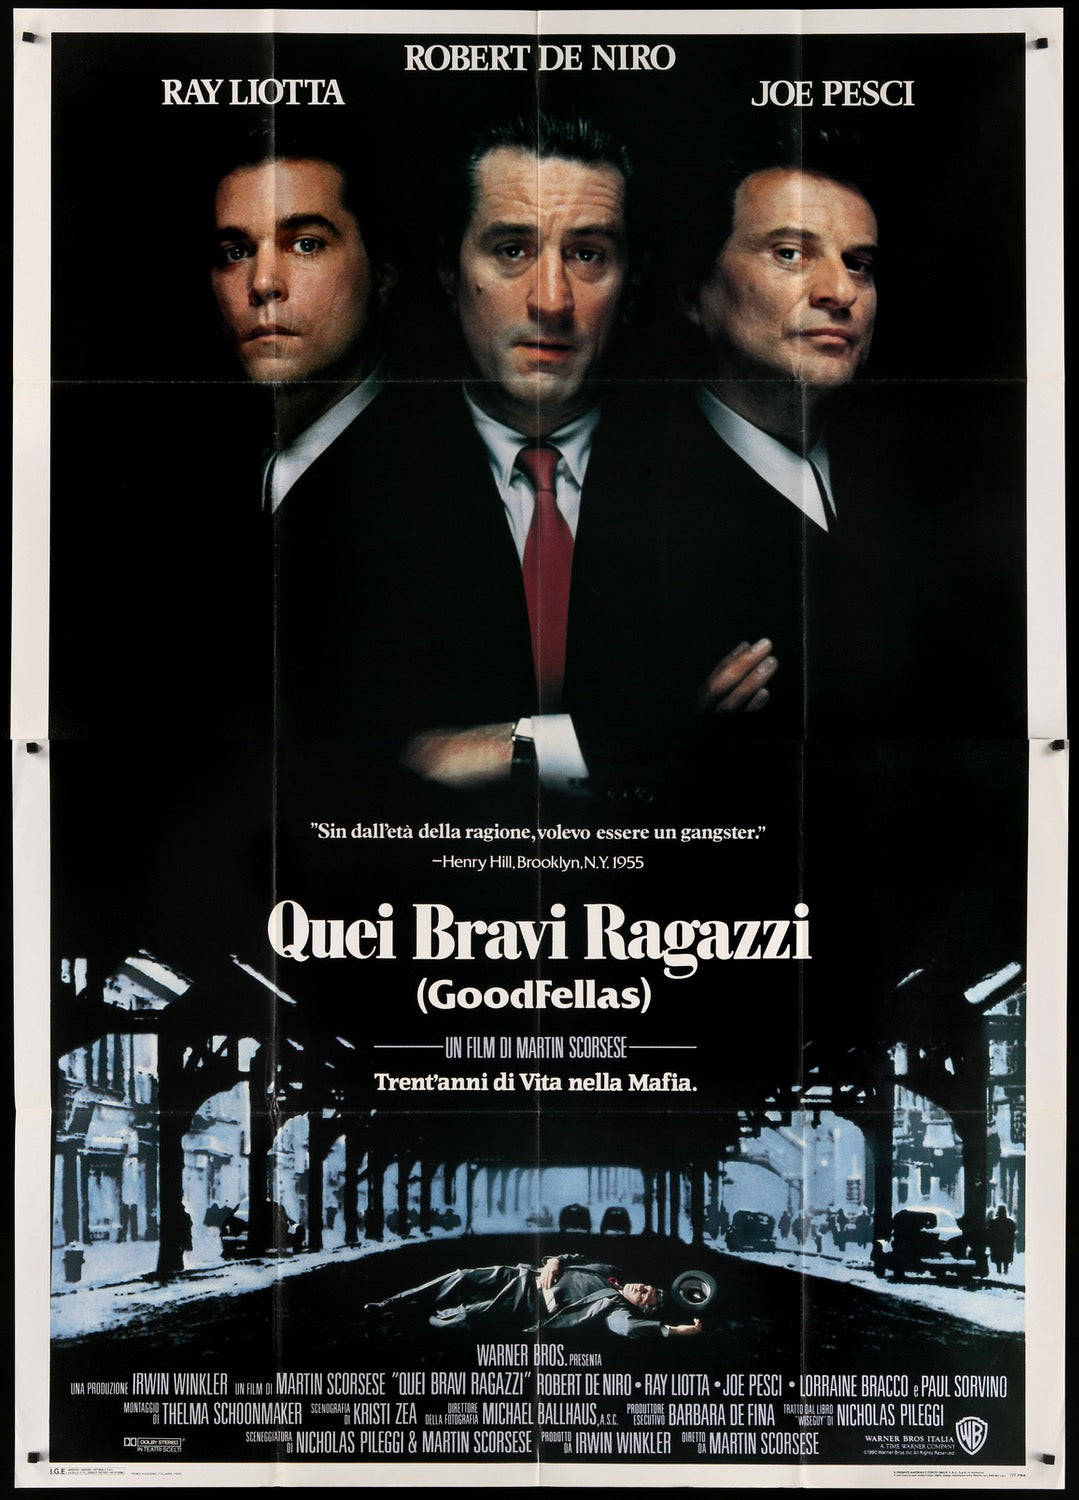 Goodfellas Italian Edition Poster Wallpaper